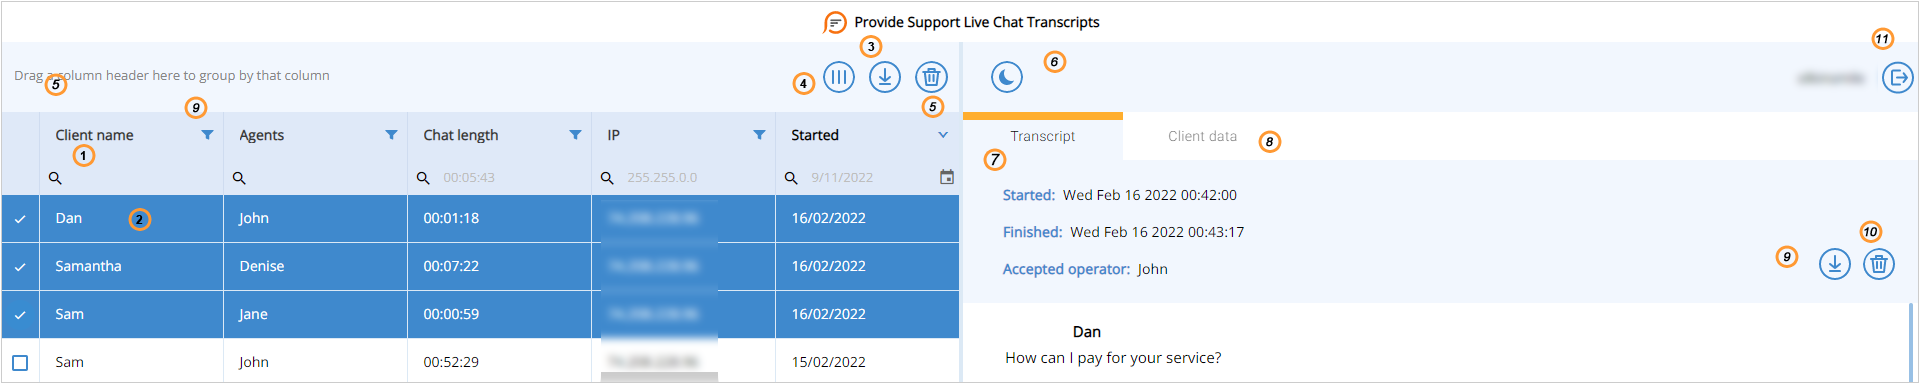 Chat transcripts app